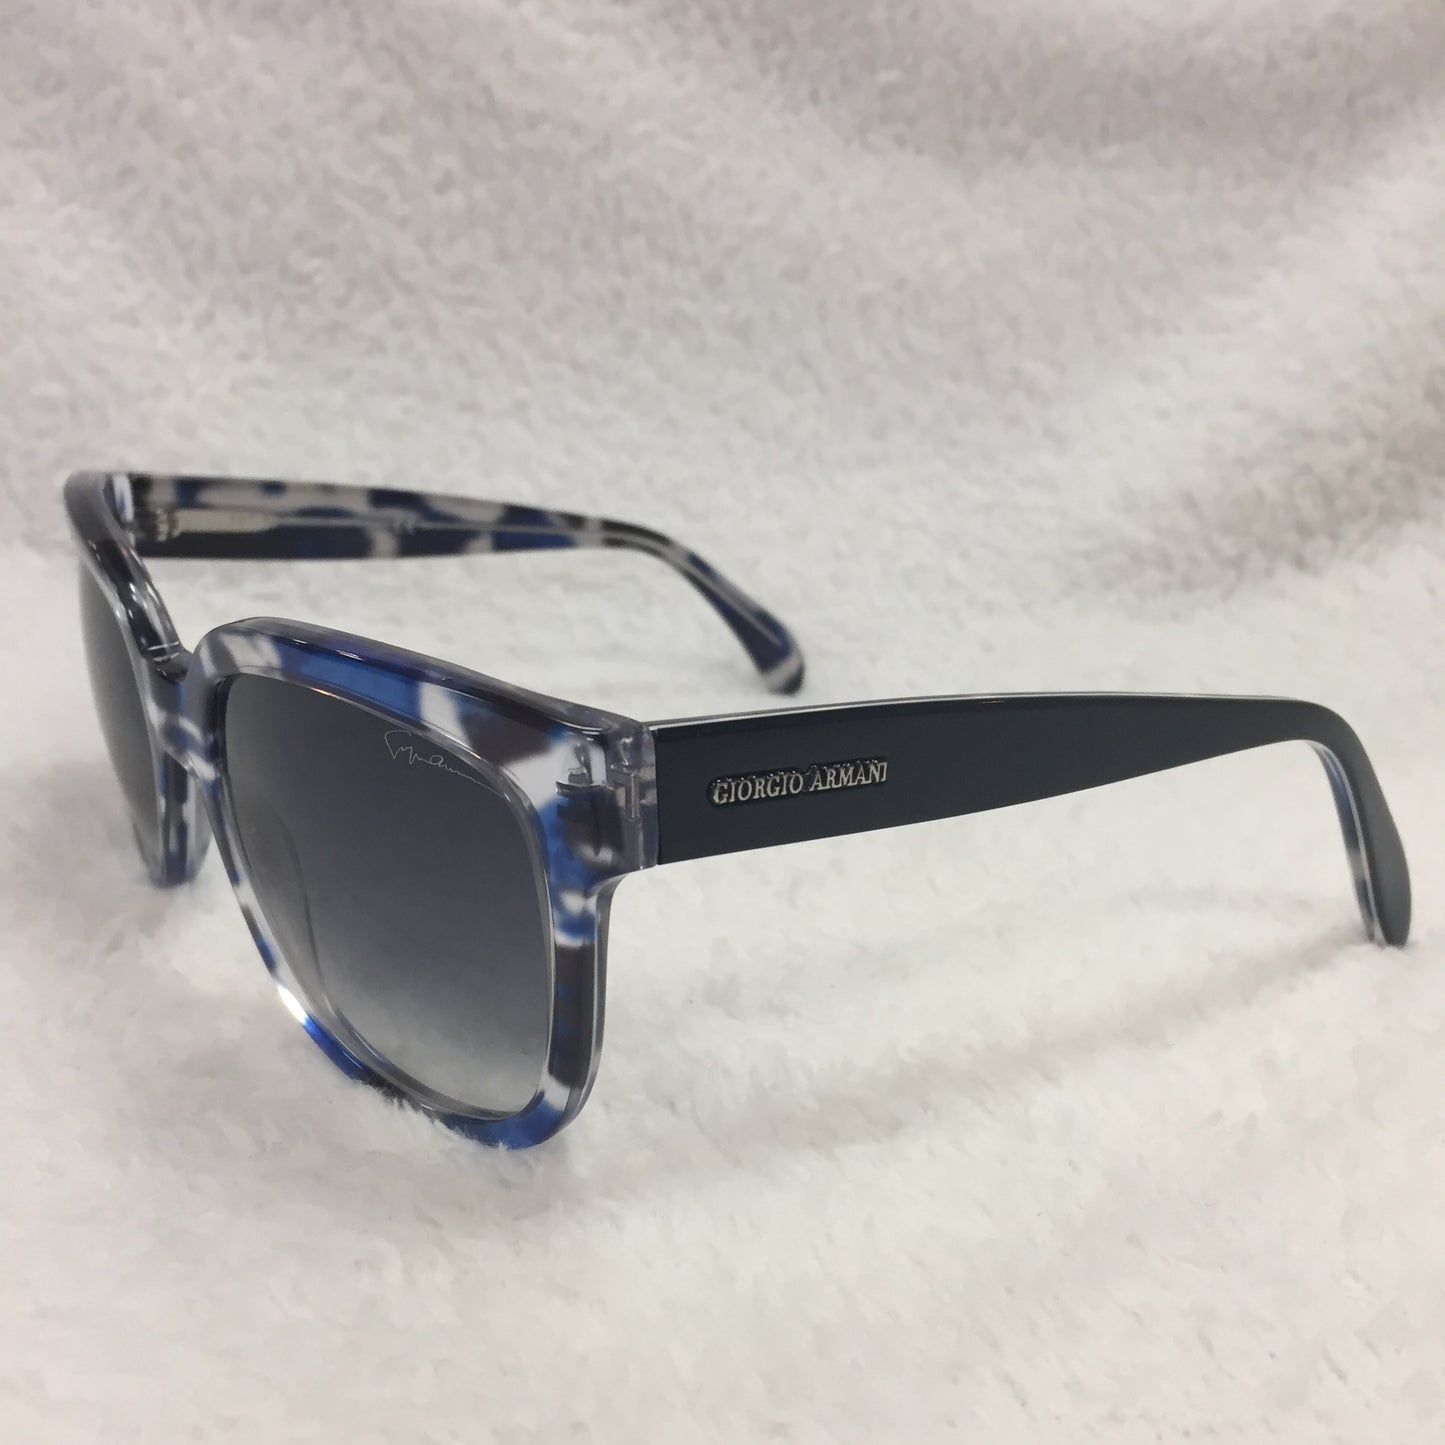 Authentic Giorgio Armani Blue Marble Sunglasses